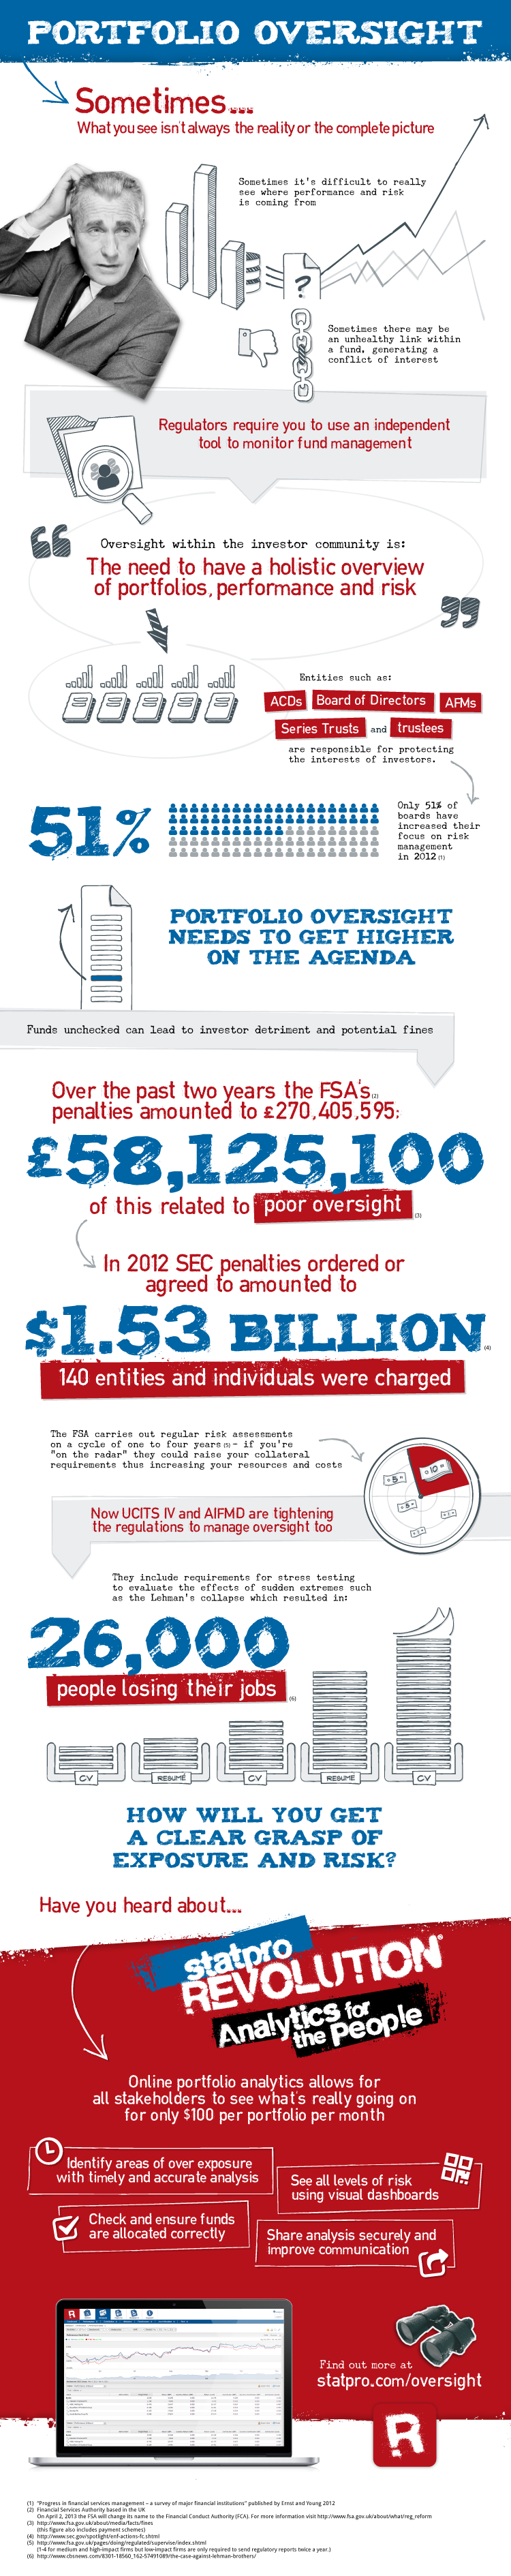 Portfolio Oversight from StatPro - infographic